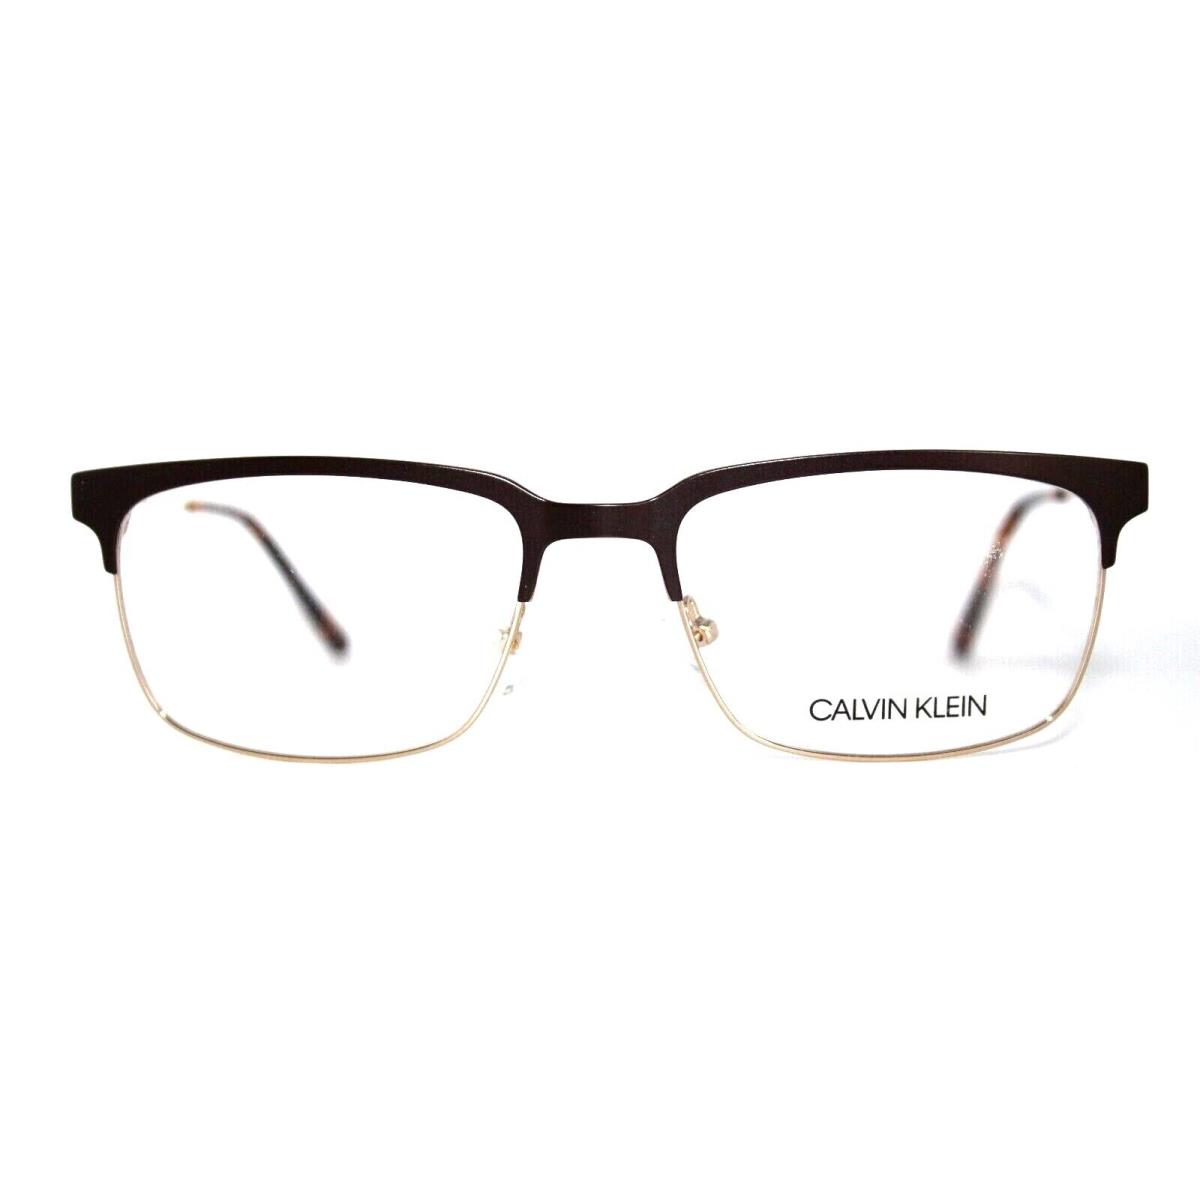 Calvin Klein CK 18109 200 Brown Eyeglasses Frames 53MM W/case